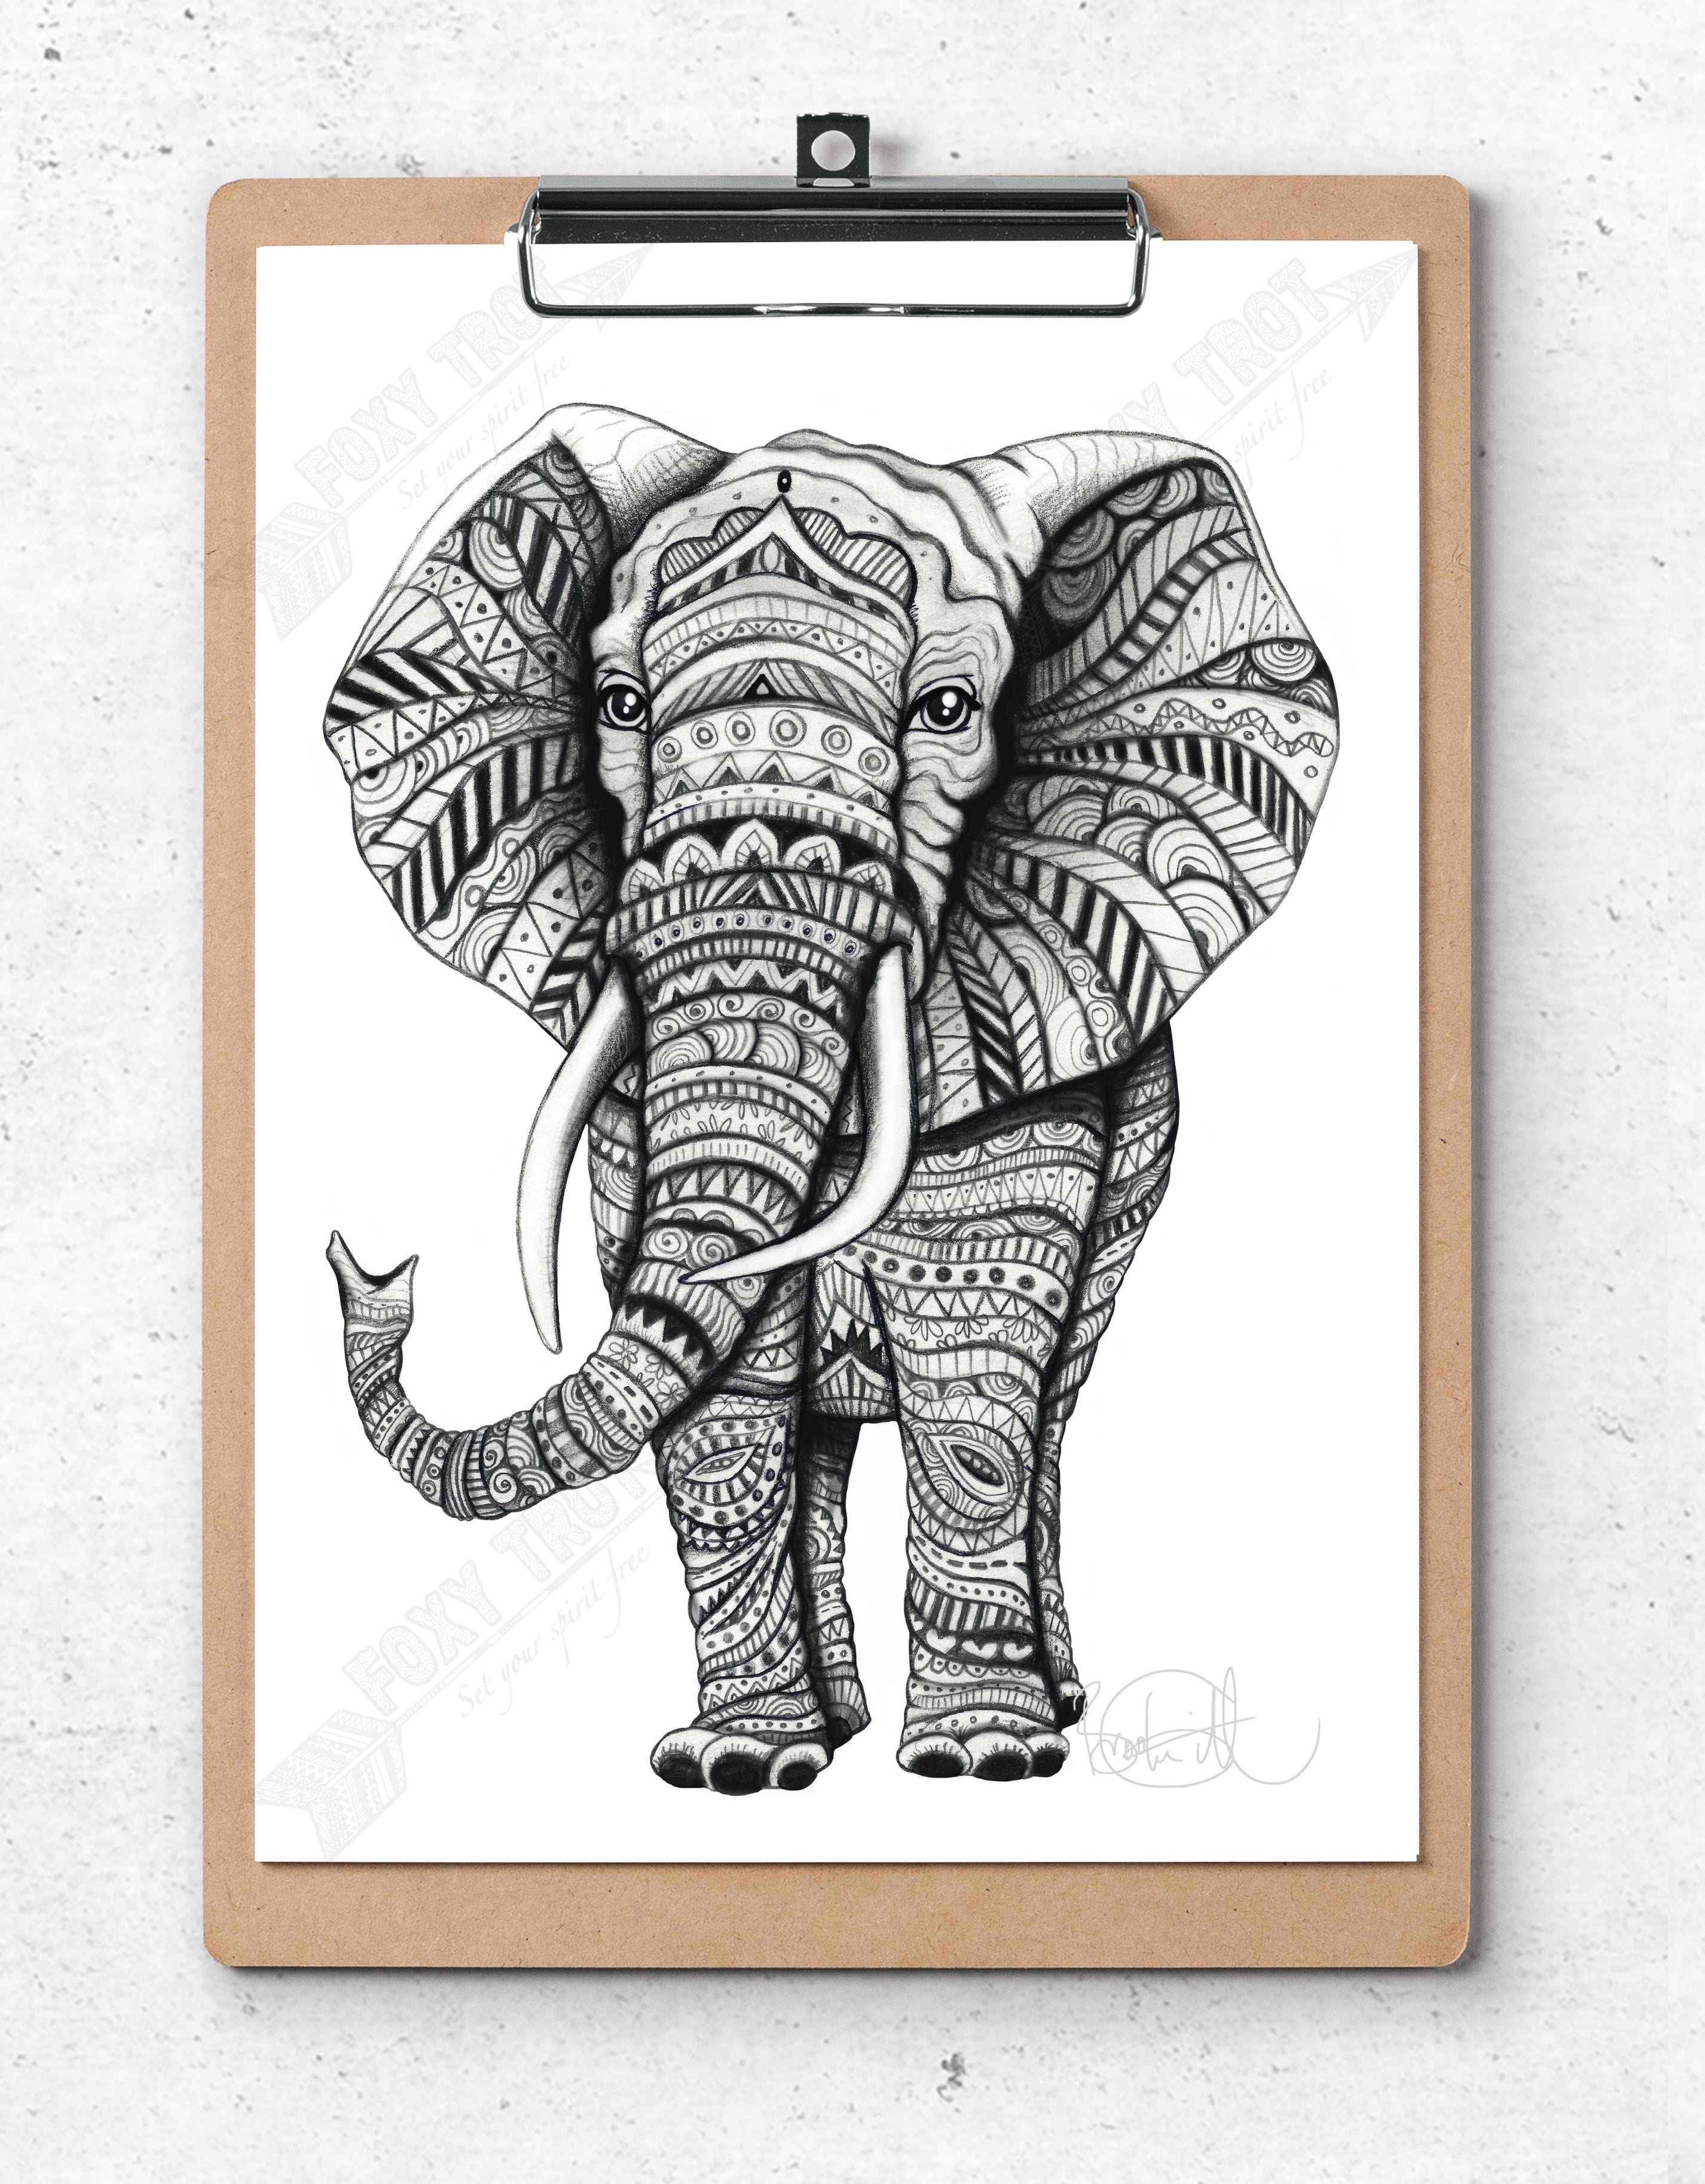 Elephant Monochrome